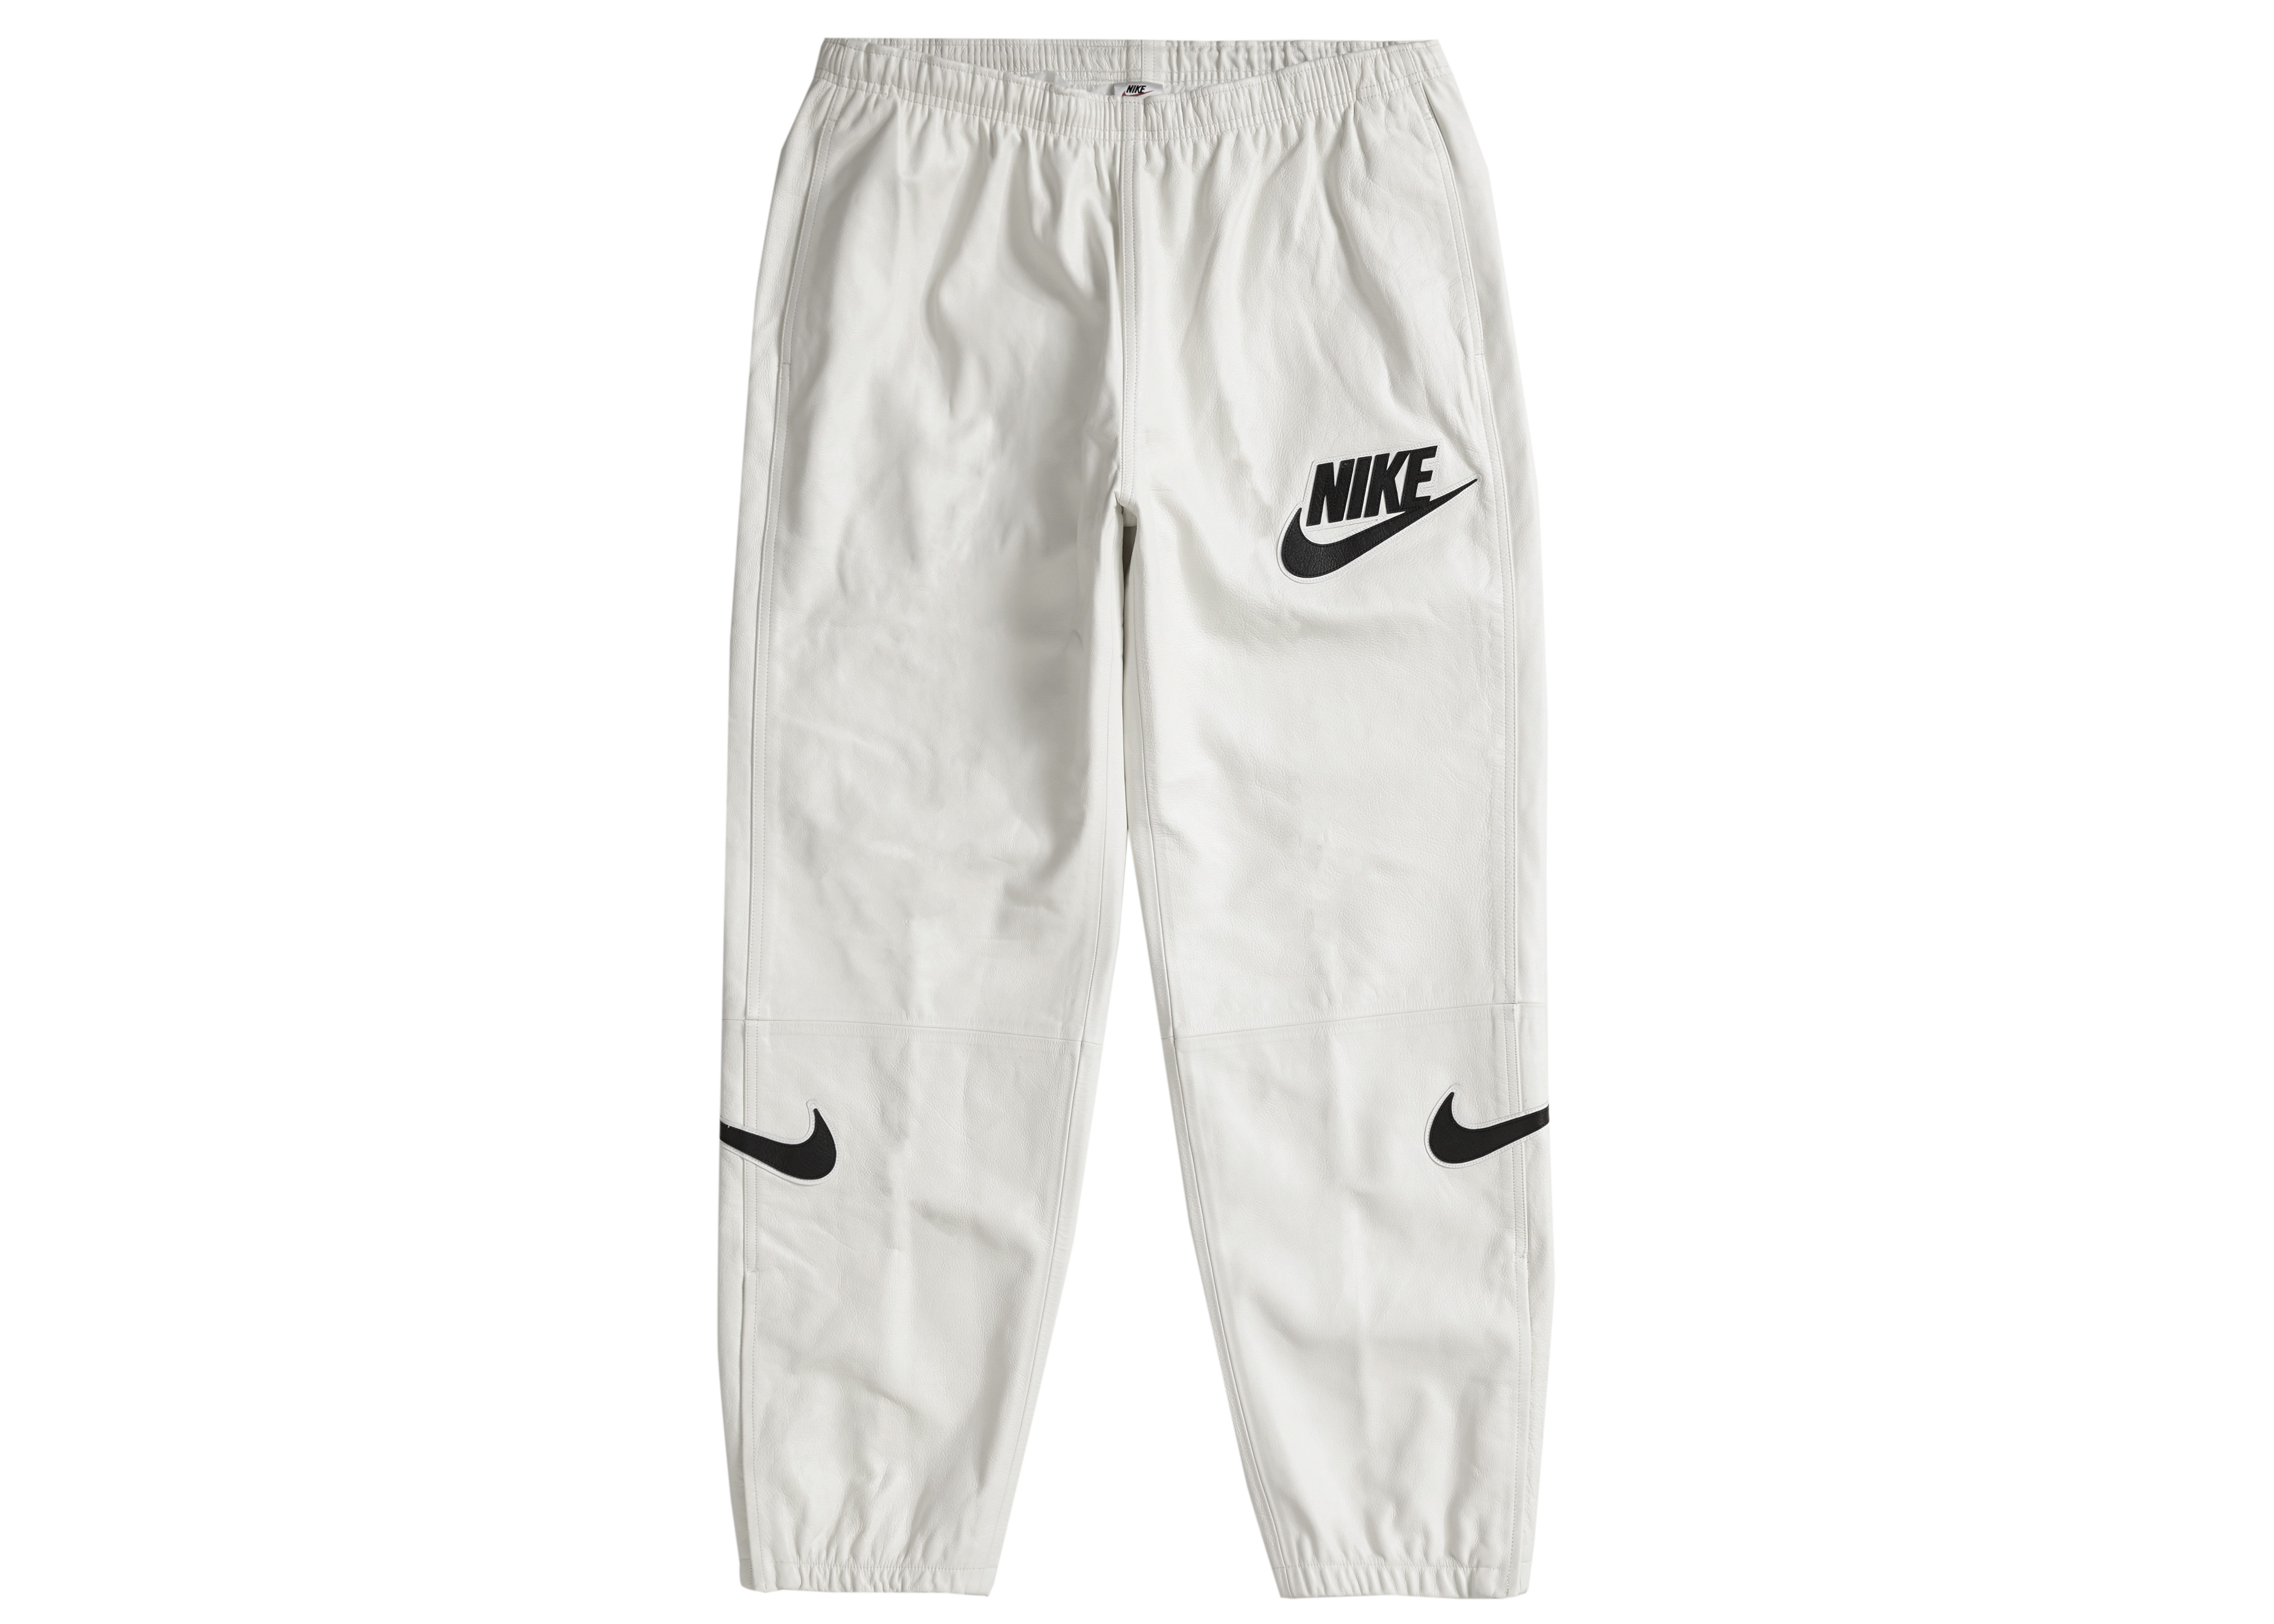 Supreme x Nike Leather Warm Up Pant White - Novelship